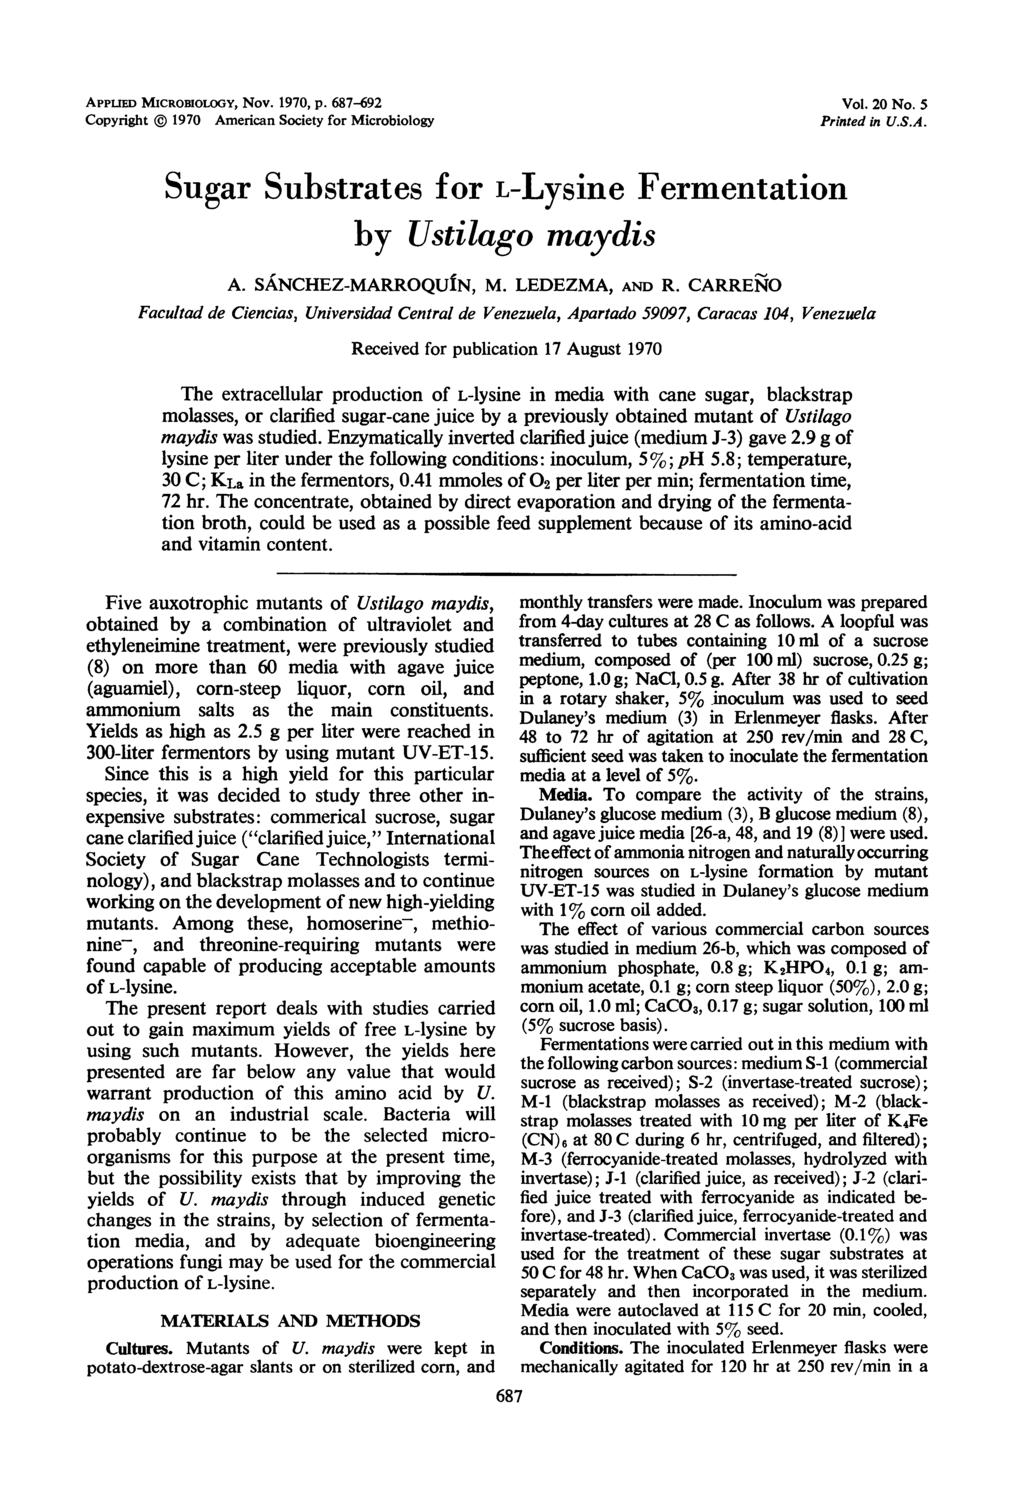 APPLED MICROBIOLOGY, Nov. 1970, p. 687-692 Copyright @ 1970 American Society for Microbiology Vol. 20 No. 5 Printed in U.S.A. Sugar Substrates for L-Lysine Fermentation by Ustilago maydis A.